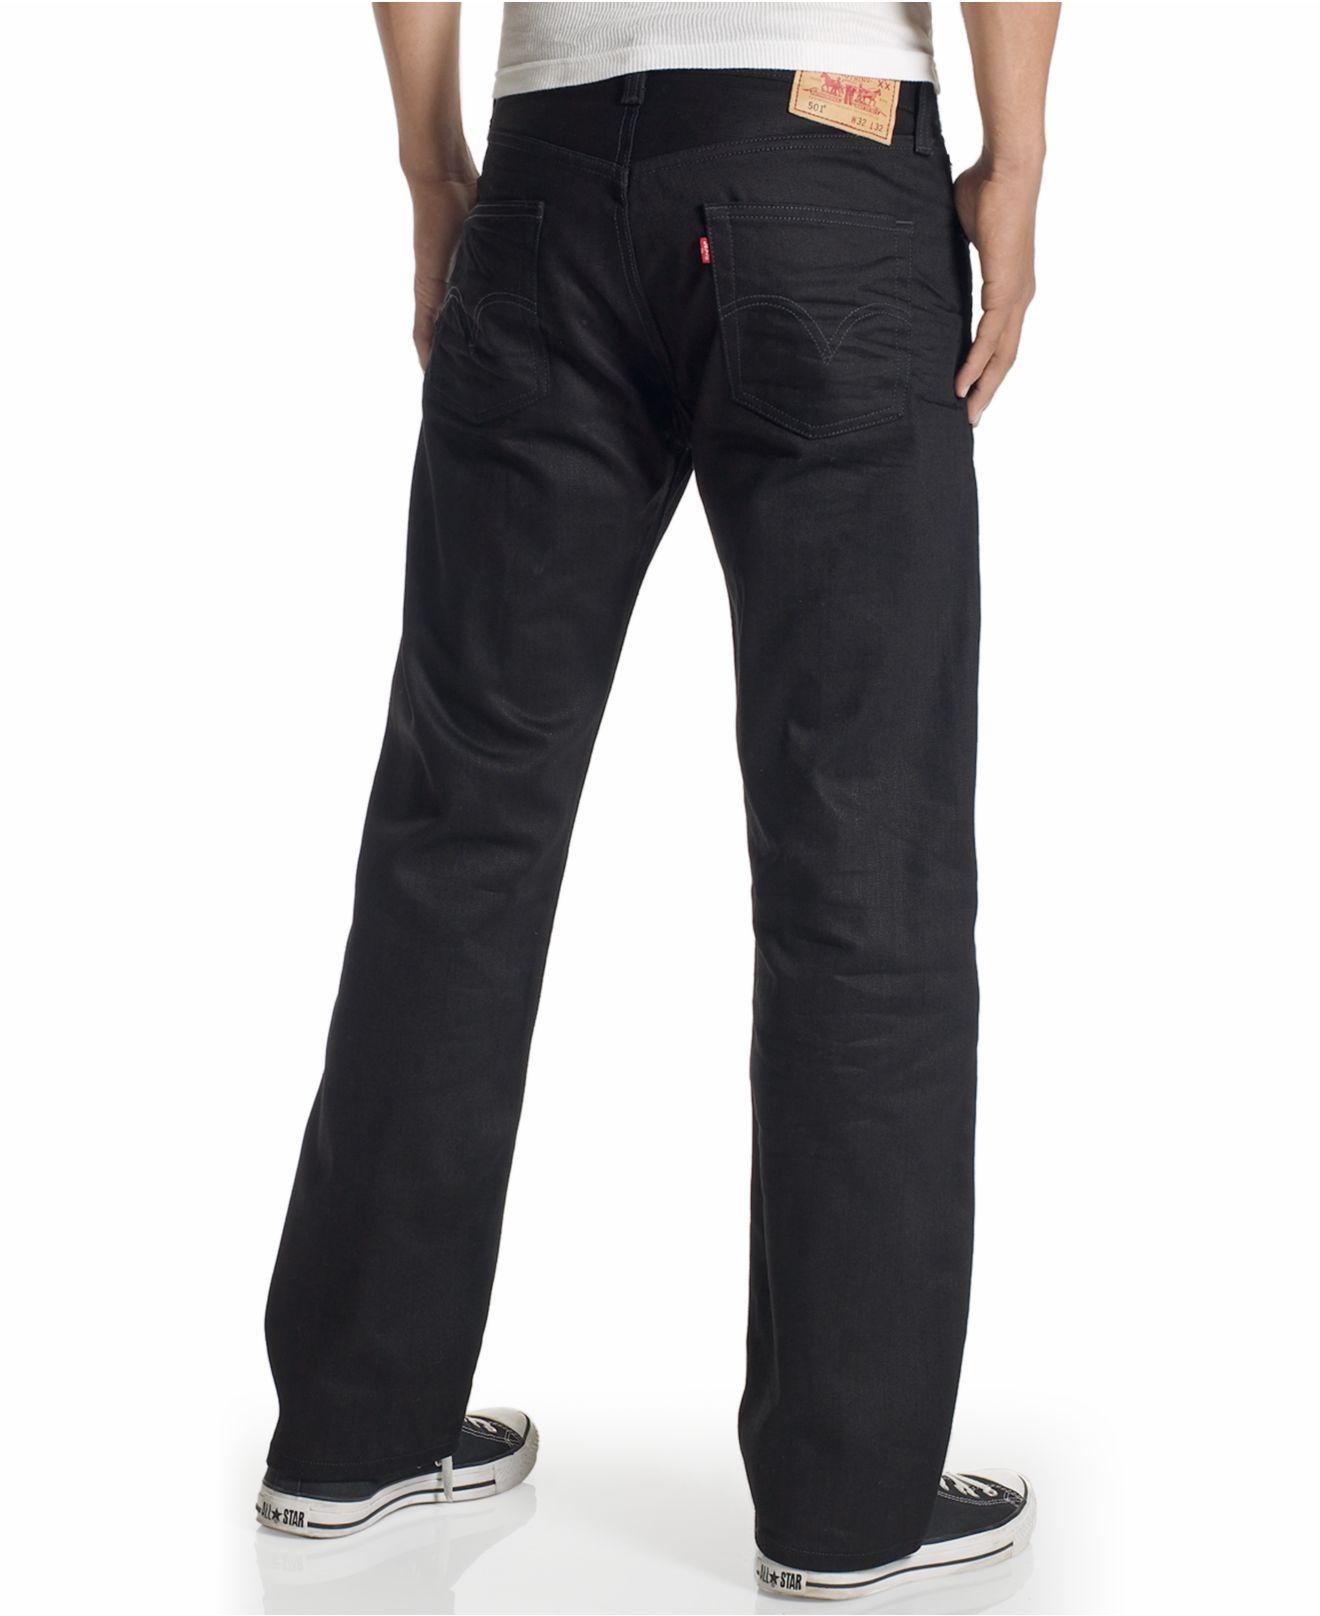 Levi's Denim 501 Original-fit Jeans in Nickel Black (Black) for Men | Lyst